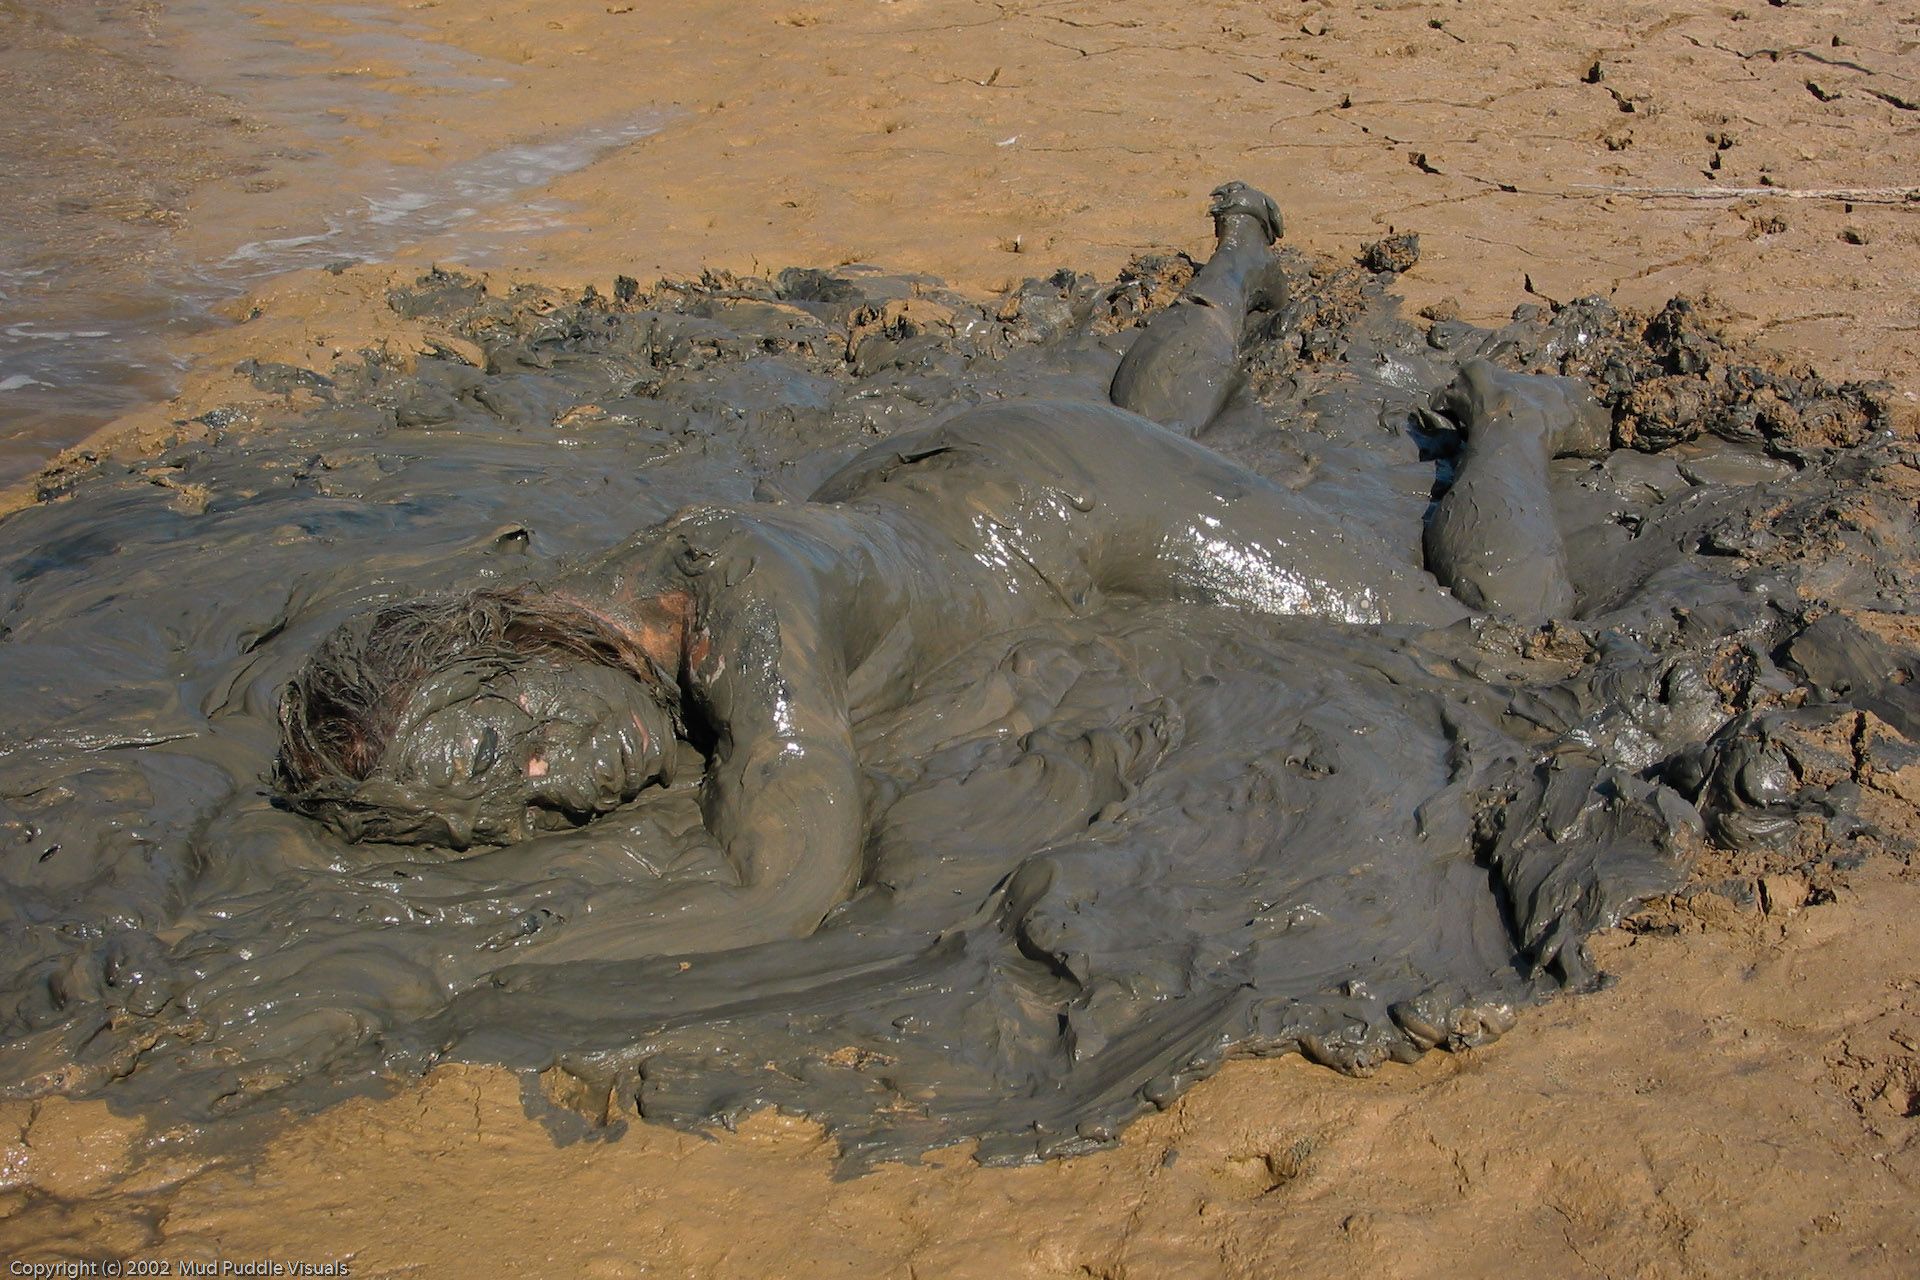 mud puddle visuals school